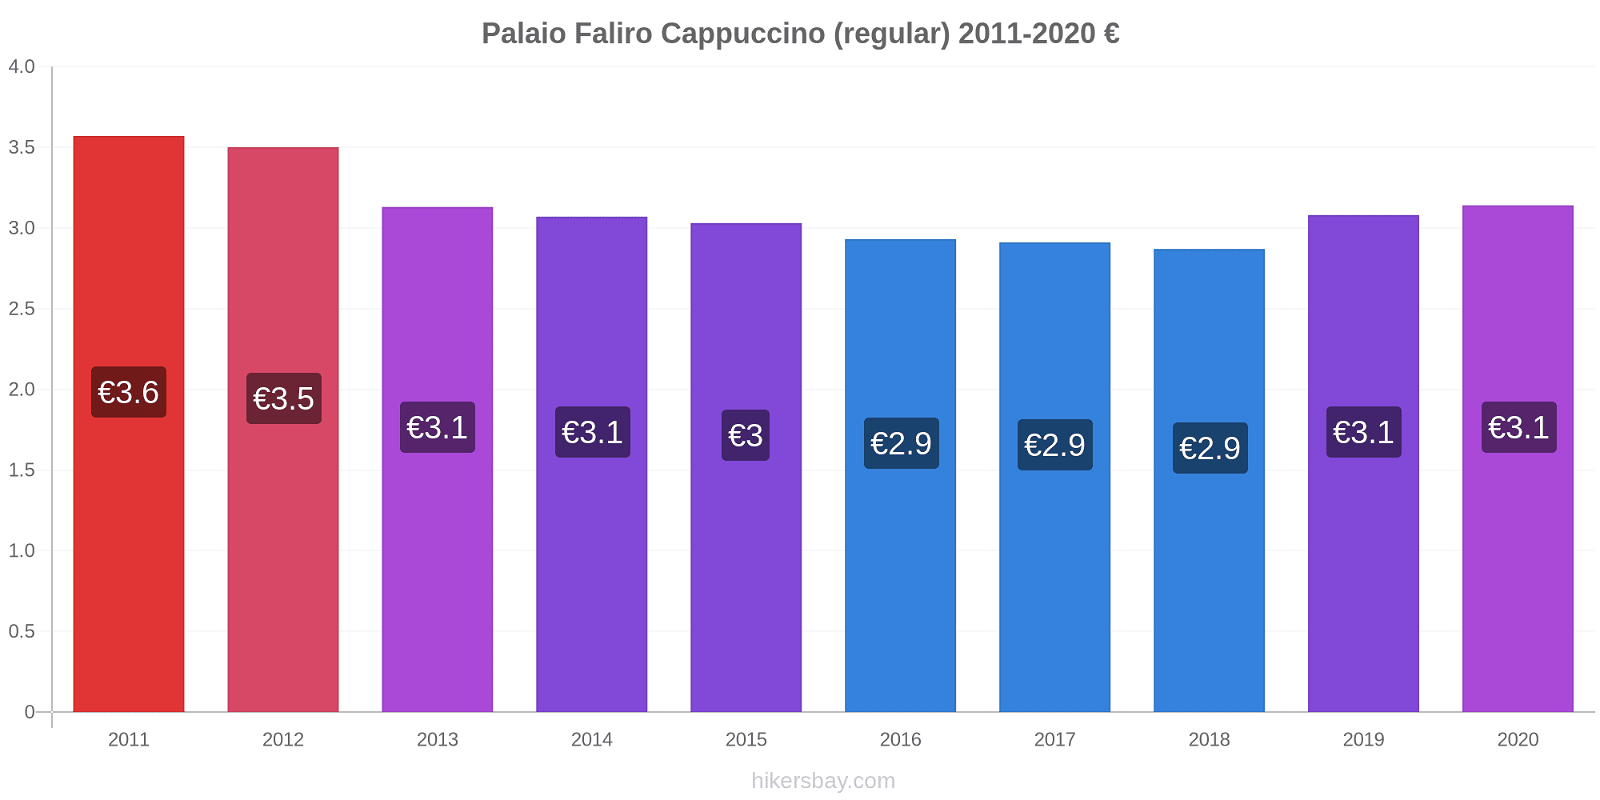 Palaio Faliro price changes Cappuccino (regular) hikersbay.com